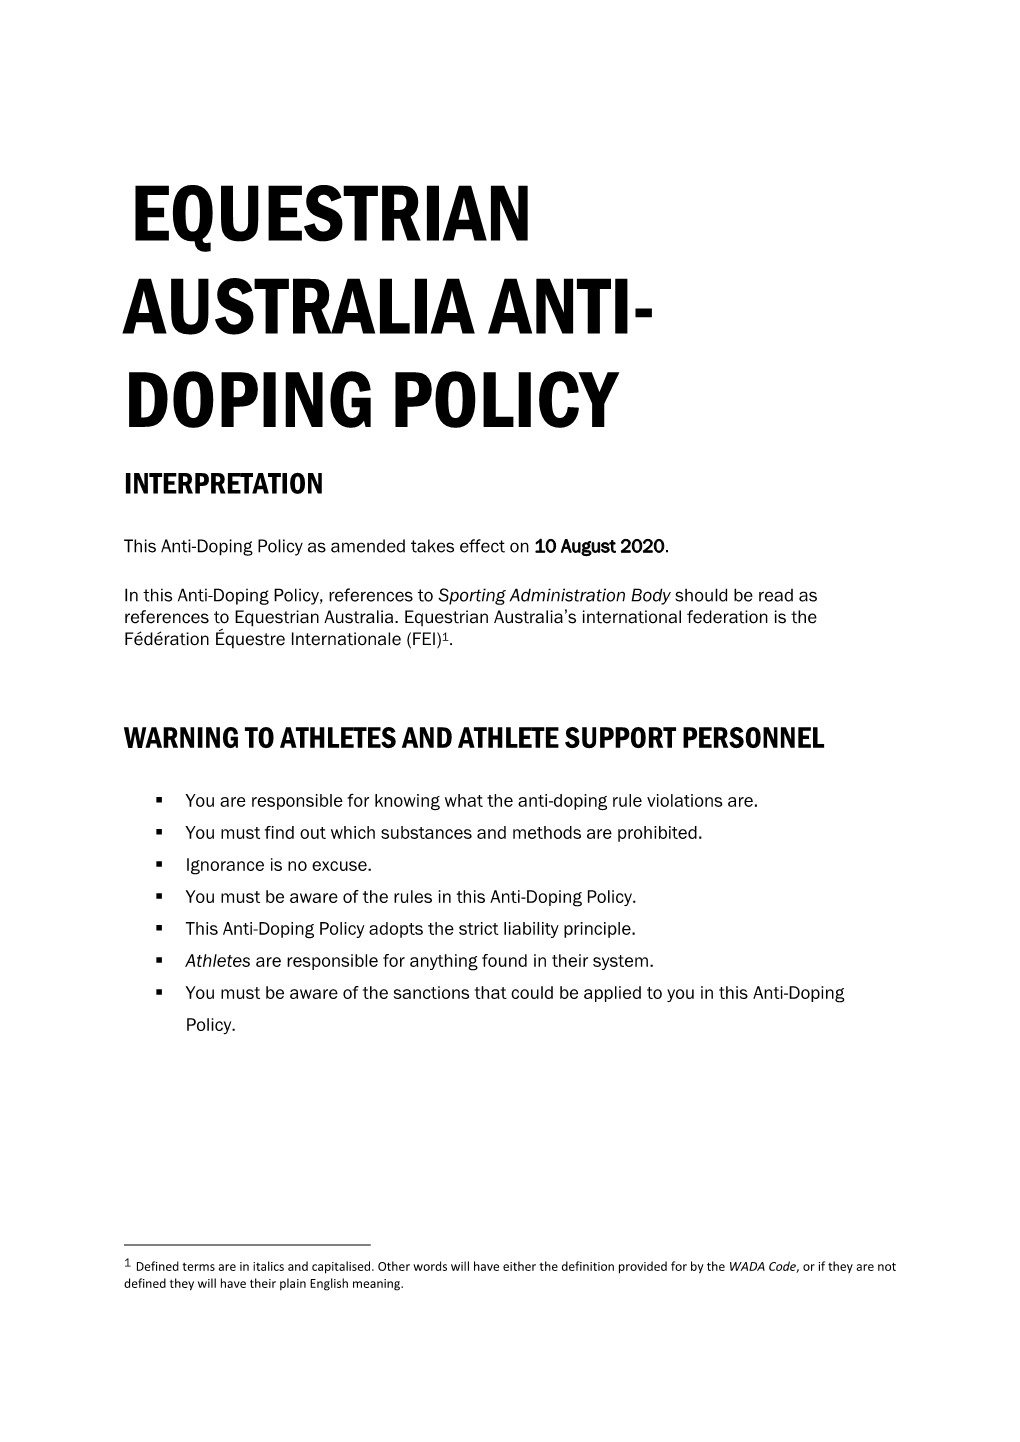 Doping Policy Interpretation